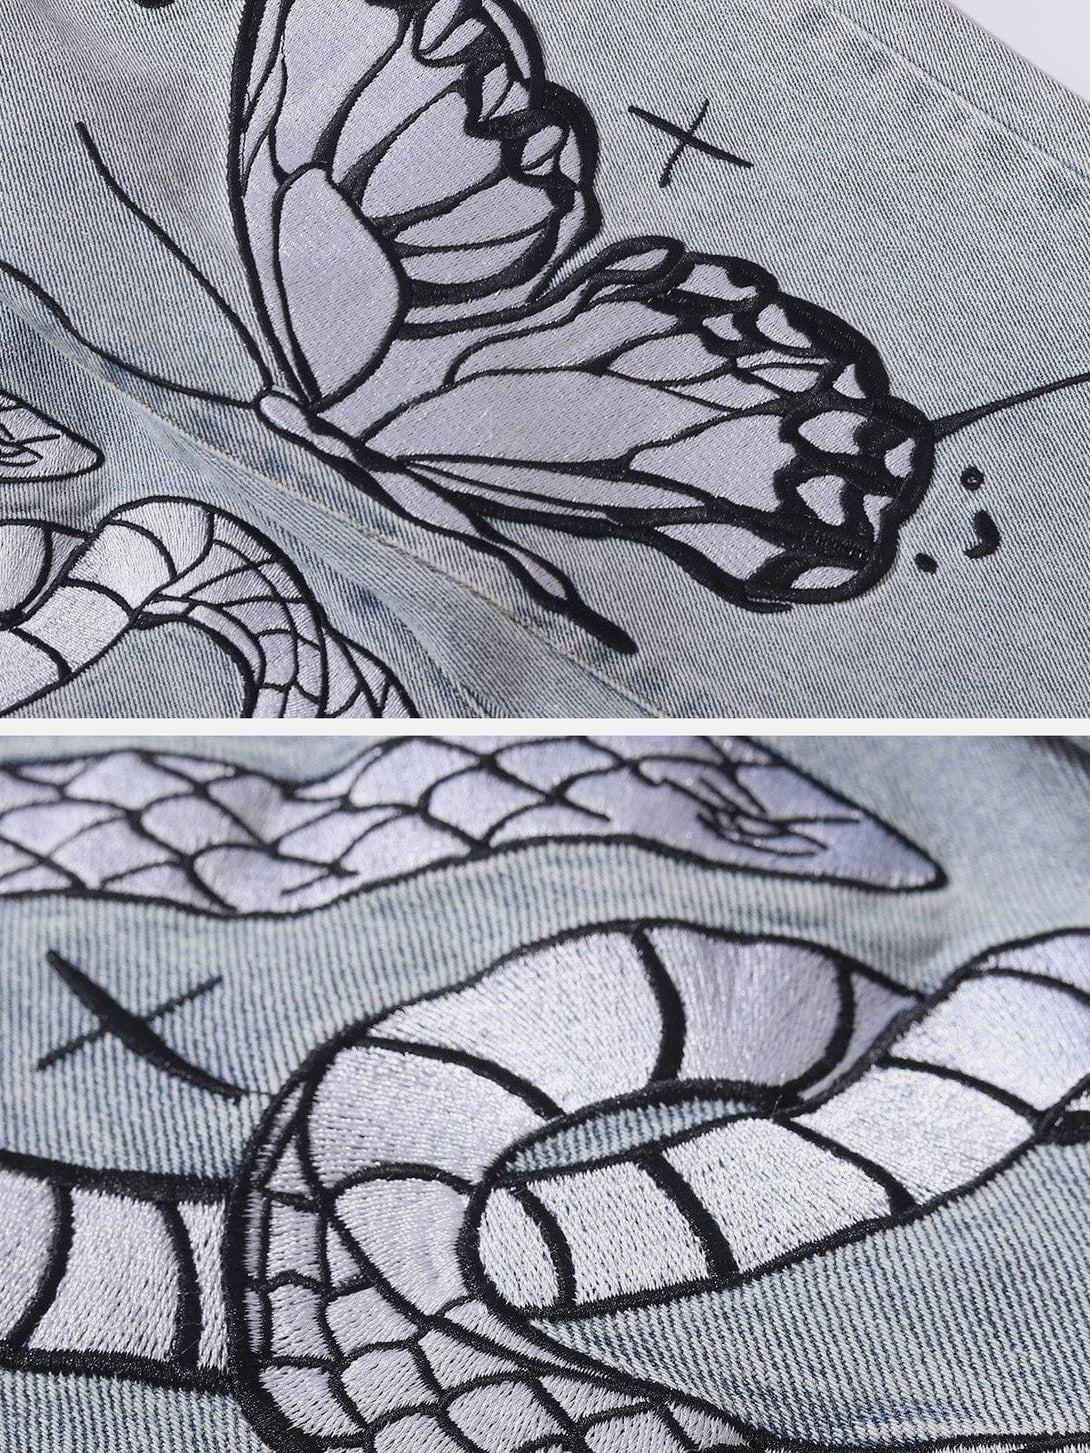 AlanBalen® - "Mysterious Trap" Embroidery Jeans AlanBalen